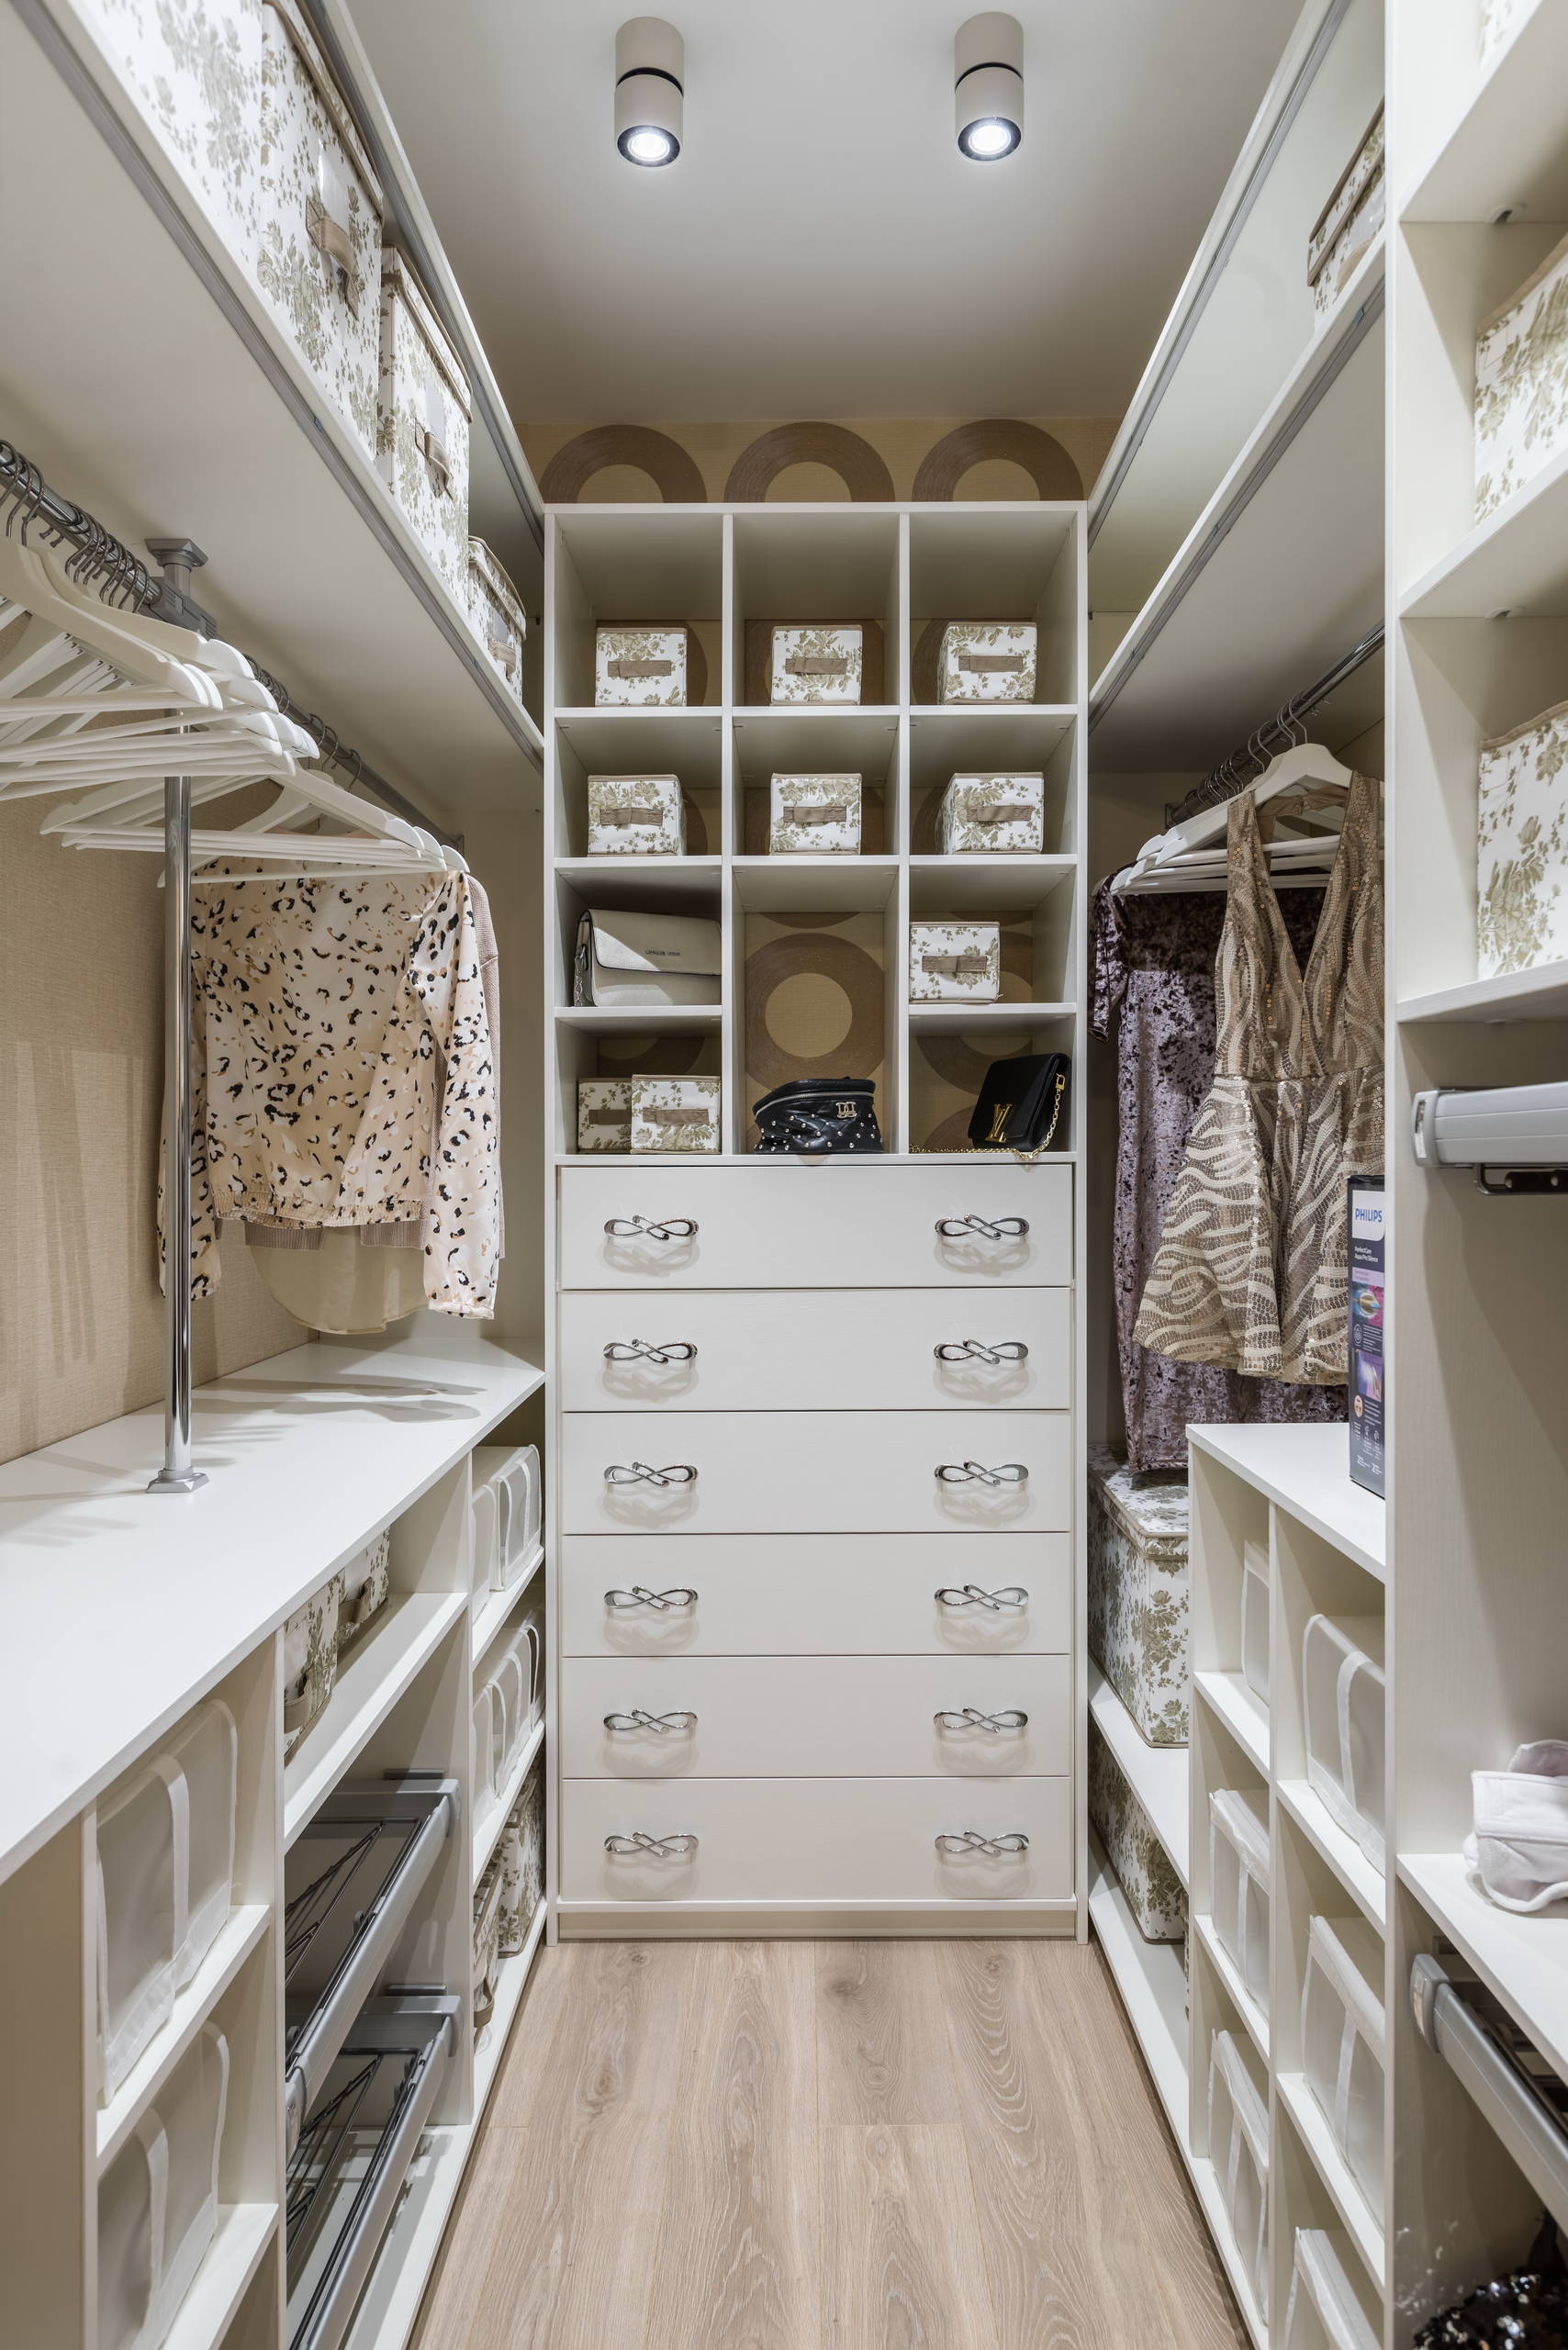 40 Ingenious Bedroom Closet Ideas and Designs — RenoGuide - Australian  Renovation Ideas and Inspiration